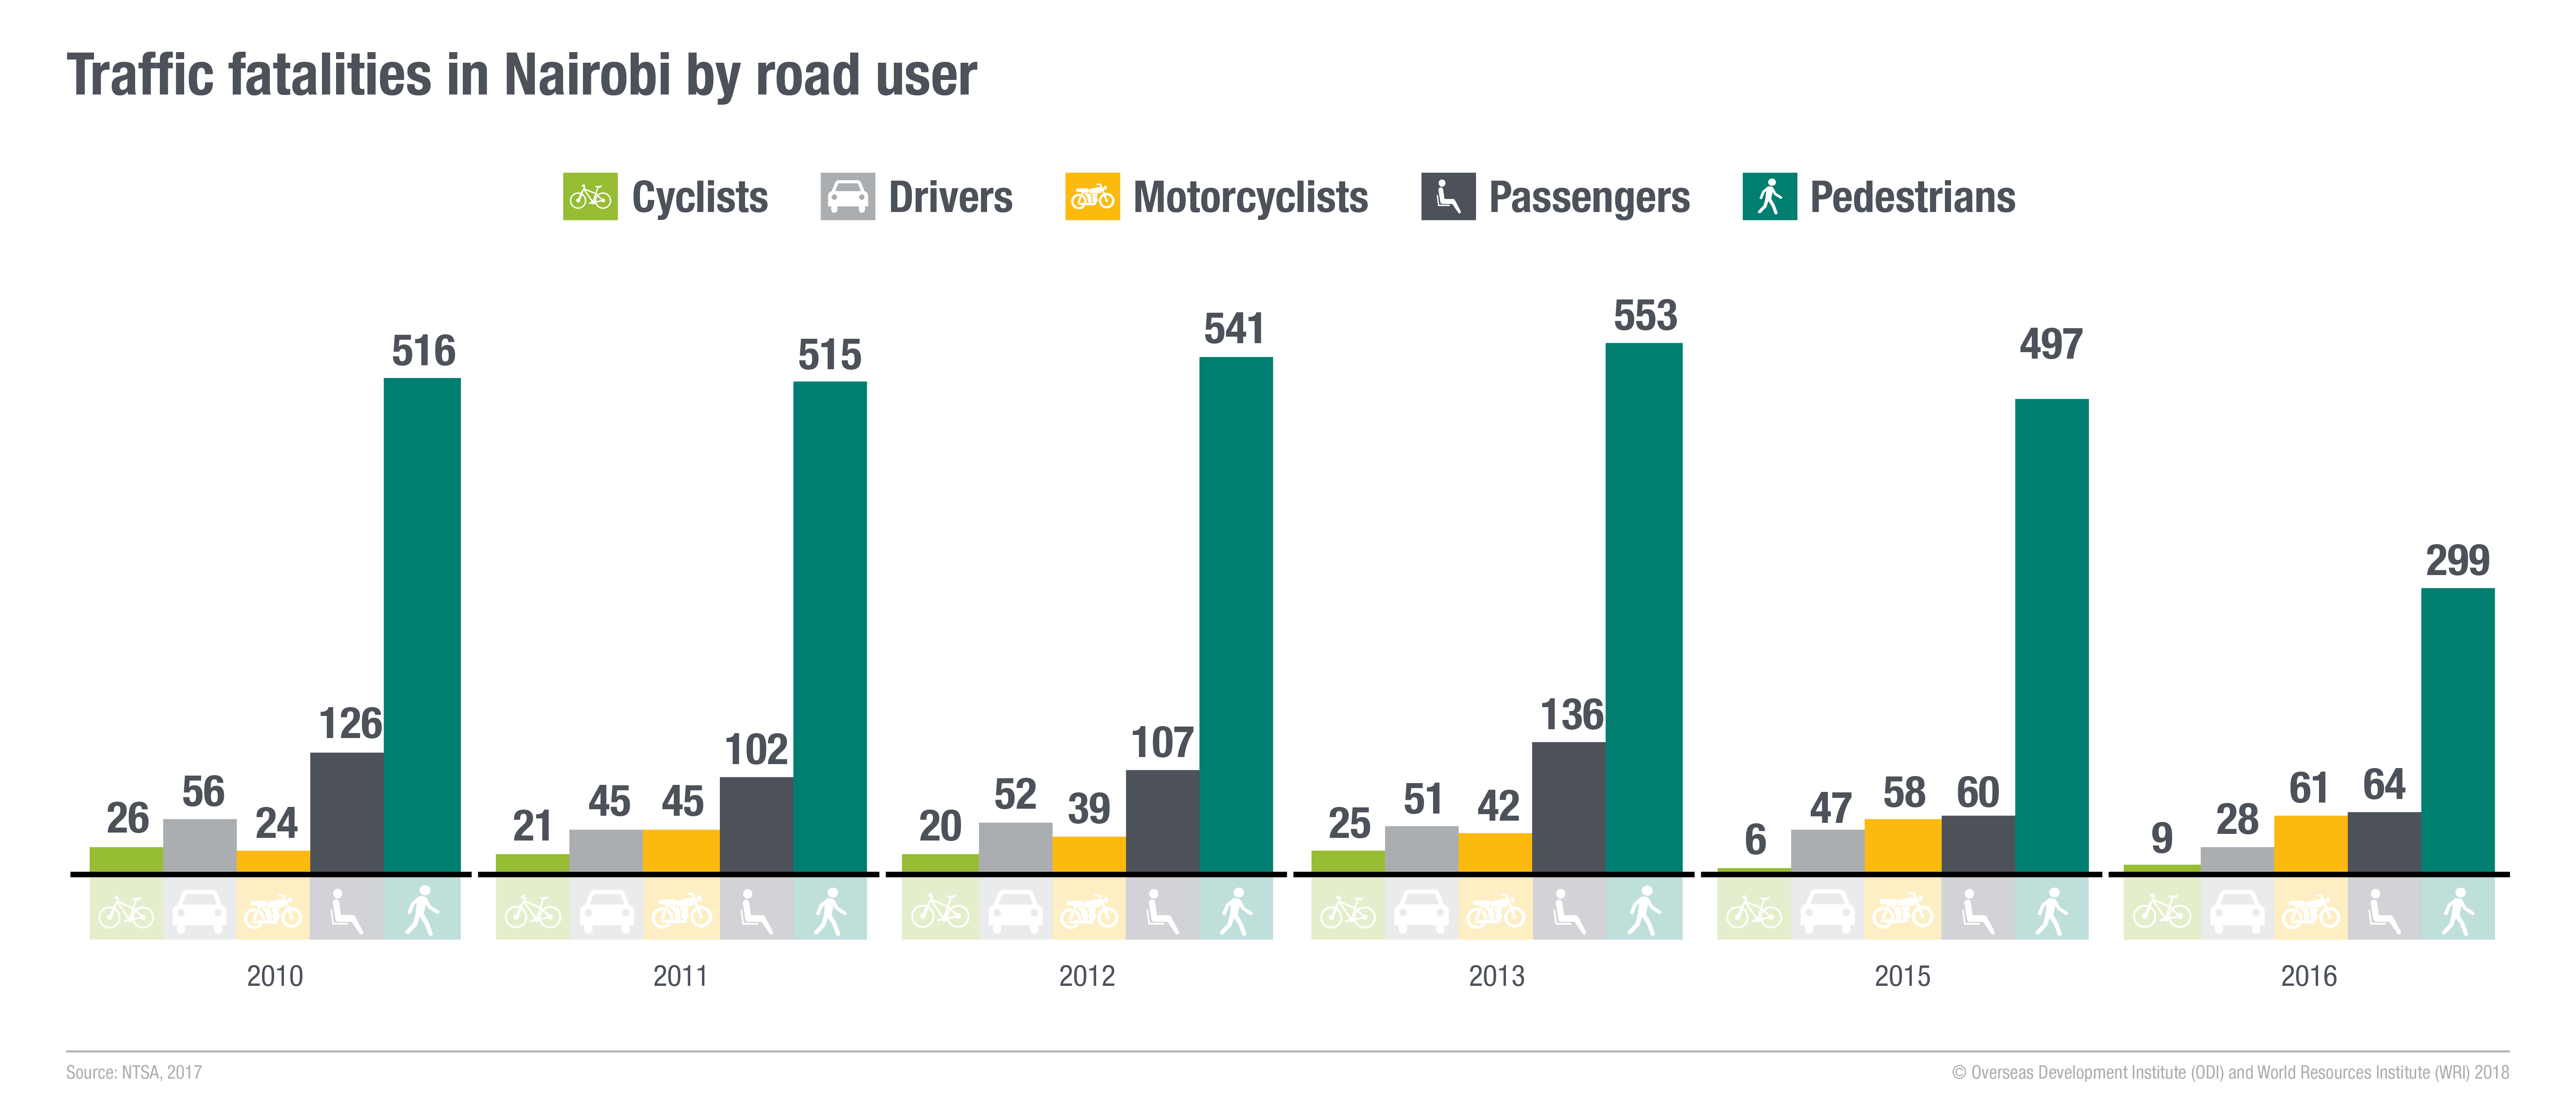 Traffic fatalities in Nairobi by road user. Image: ODI and WRI